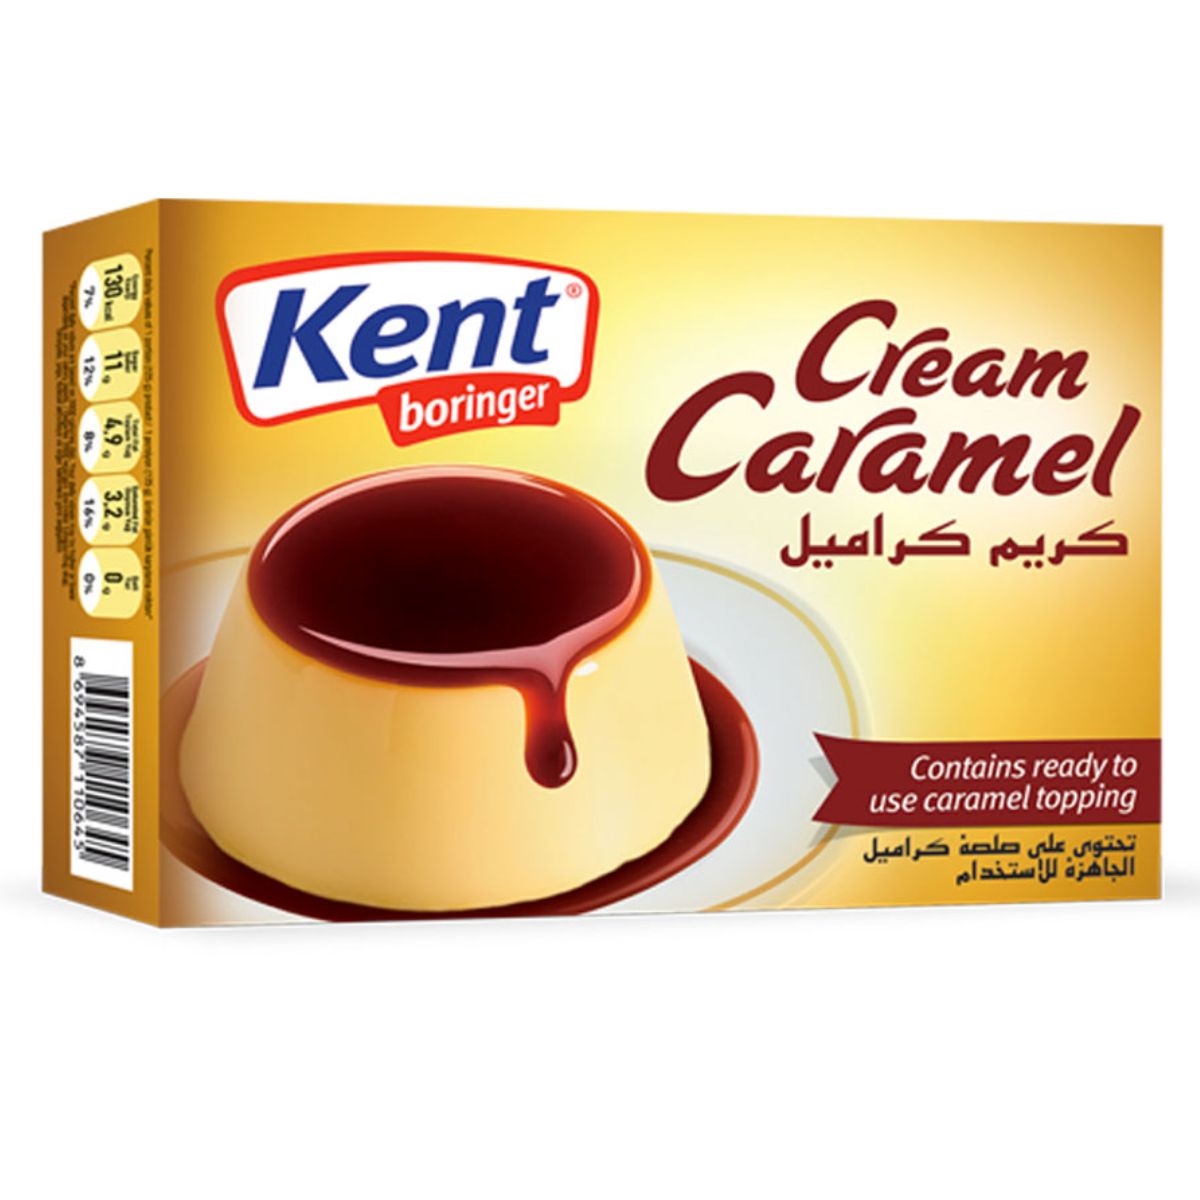 Kent - Cream Caramel - 50g in a box.